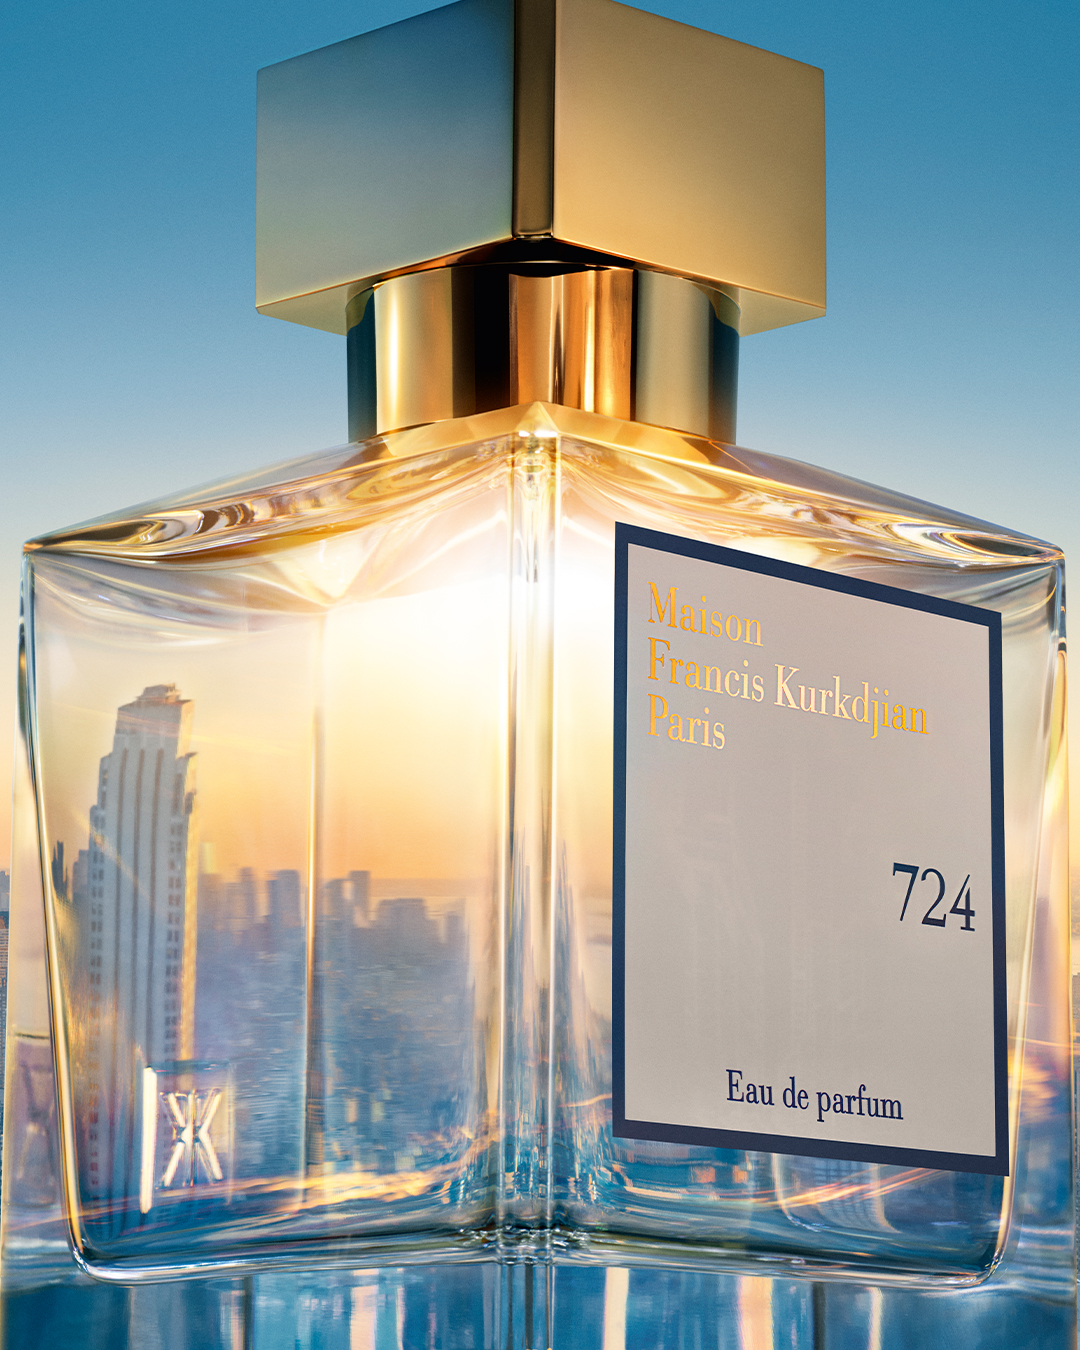 Review: Maison Francis Kurkdjian 724 Eau de Parfum